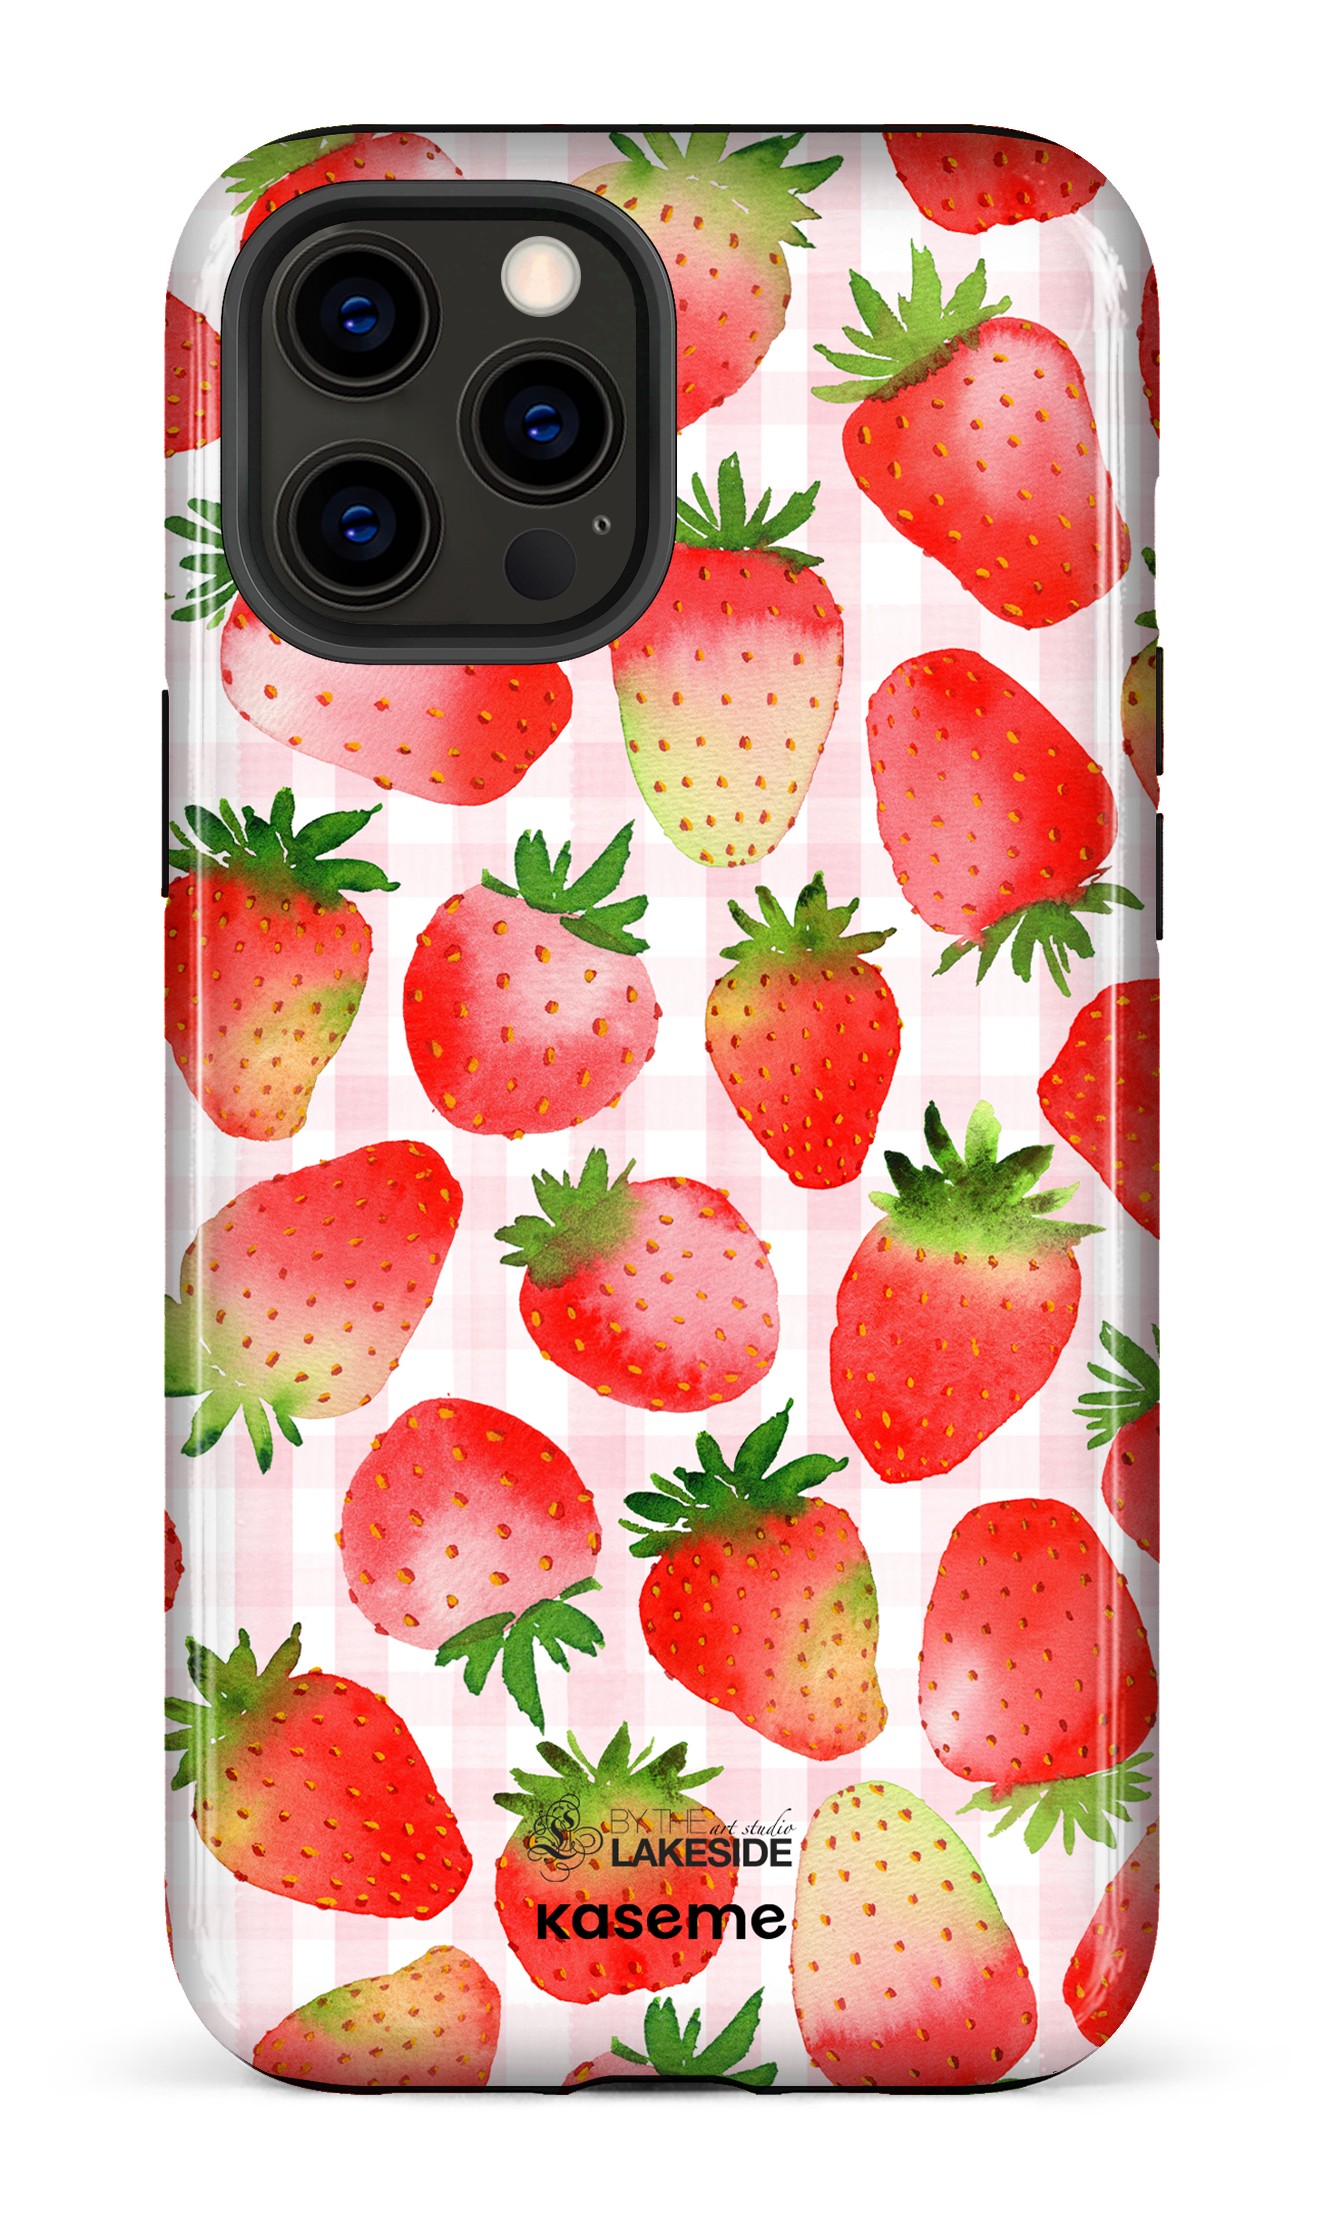 Strawberry Fields by Pooja Umrani - iPhone 12 Pro Max